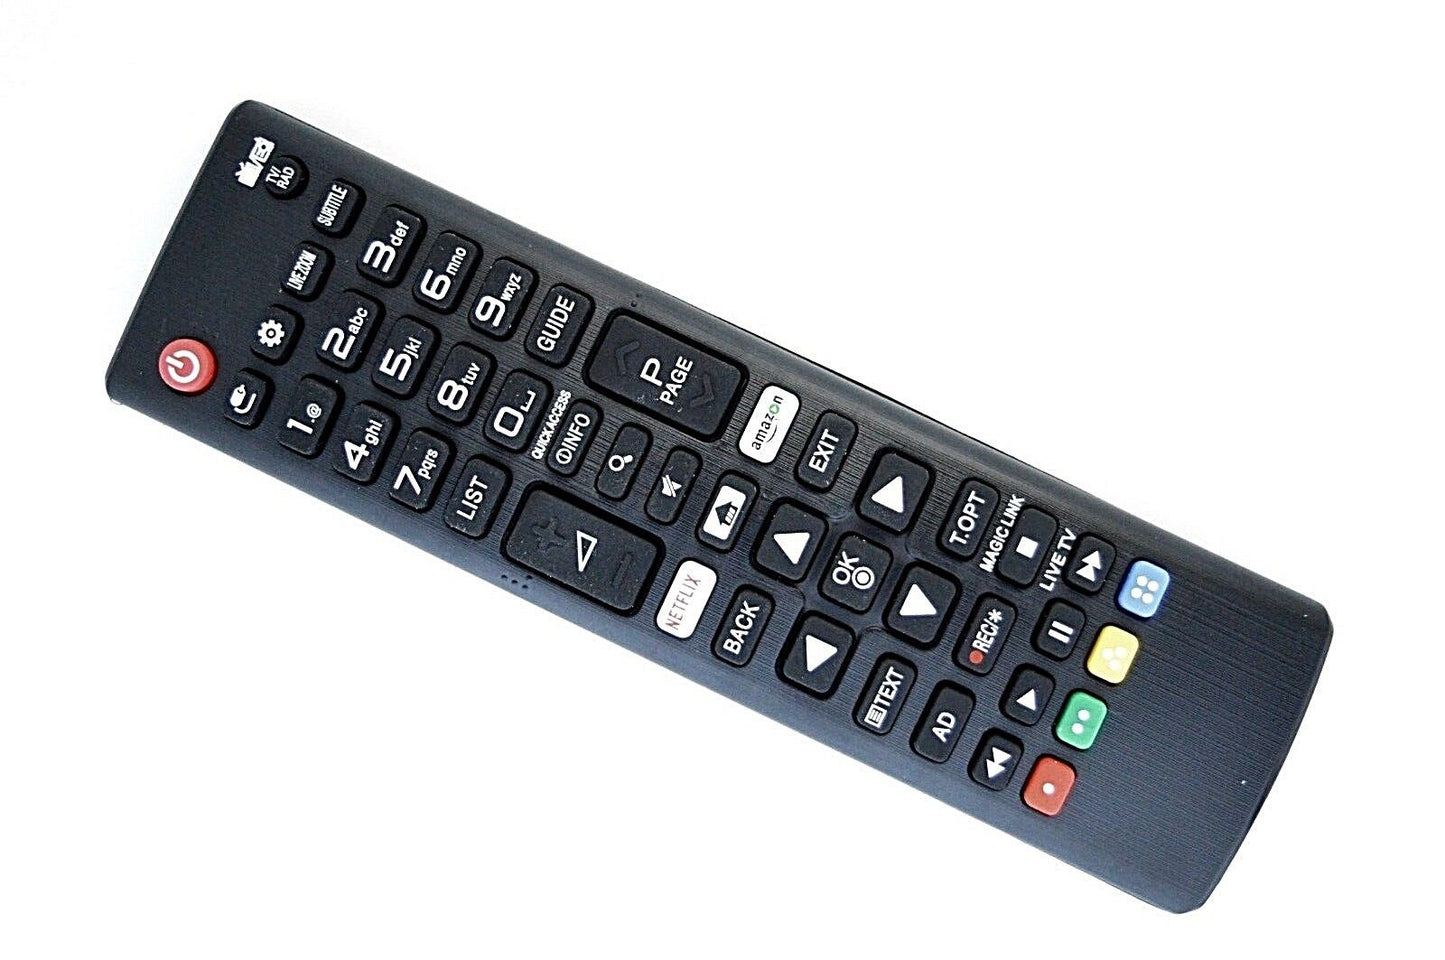 UK TV Remote Control For LG Smart LED TV 43UK6300PLB , 49UK6300PLB , 55UK6300PLB